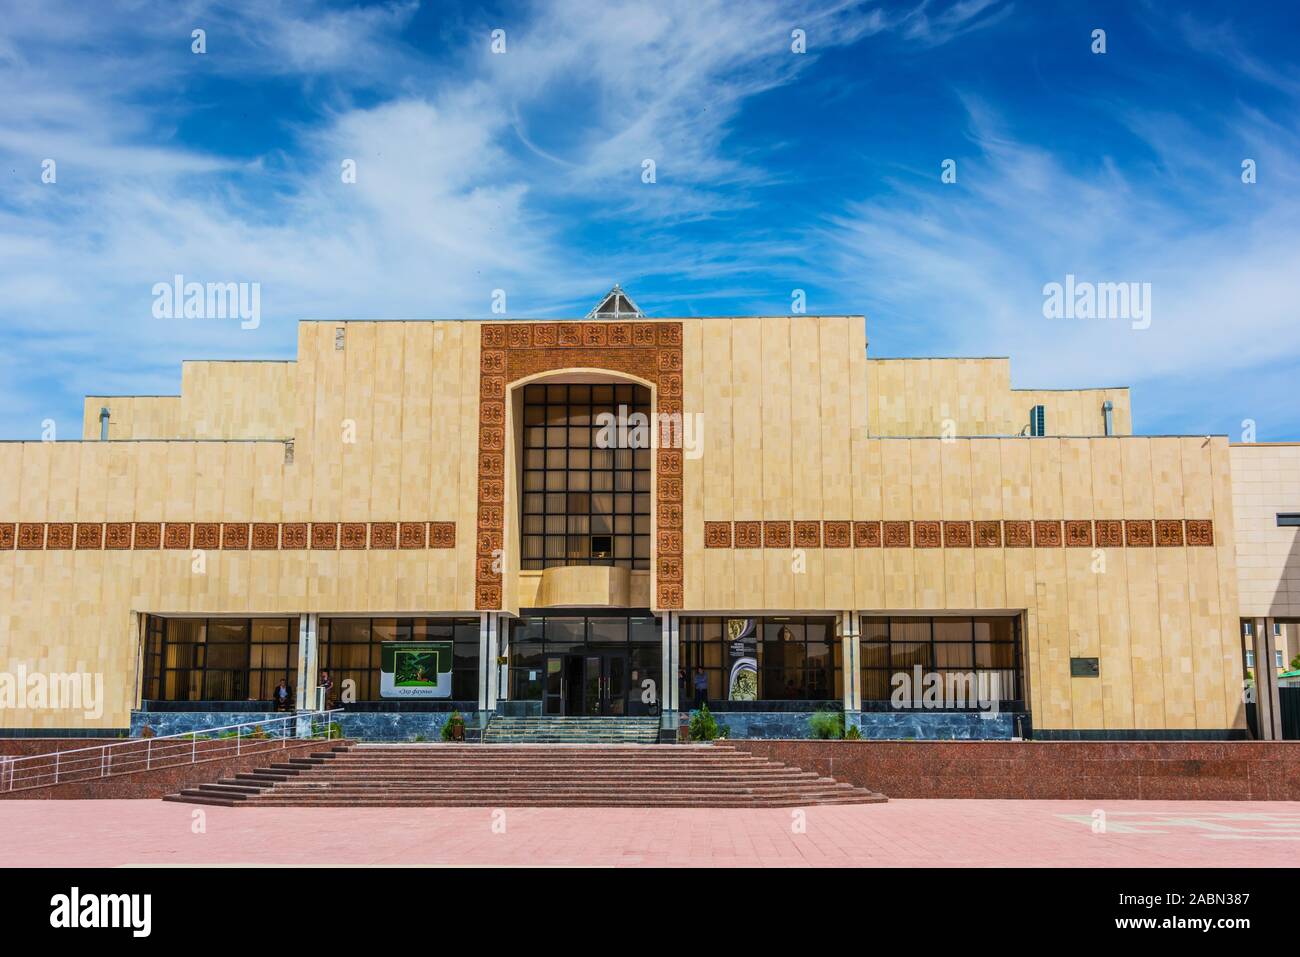 NUKUS, UZBEKISTAN - MAY 6, 2019: The State Art Museum of the Republic of Karakalpakstan in Nukus, Uzbekistan Stock Photo